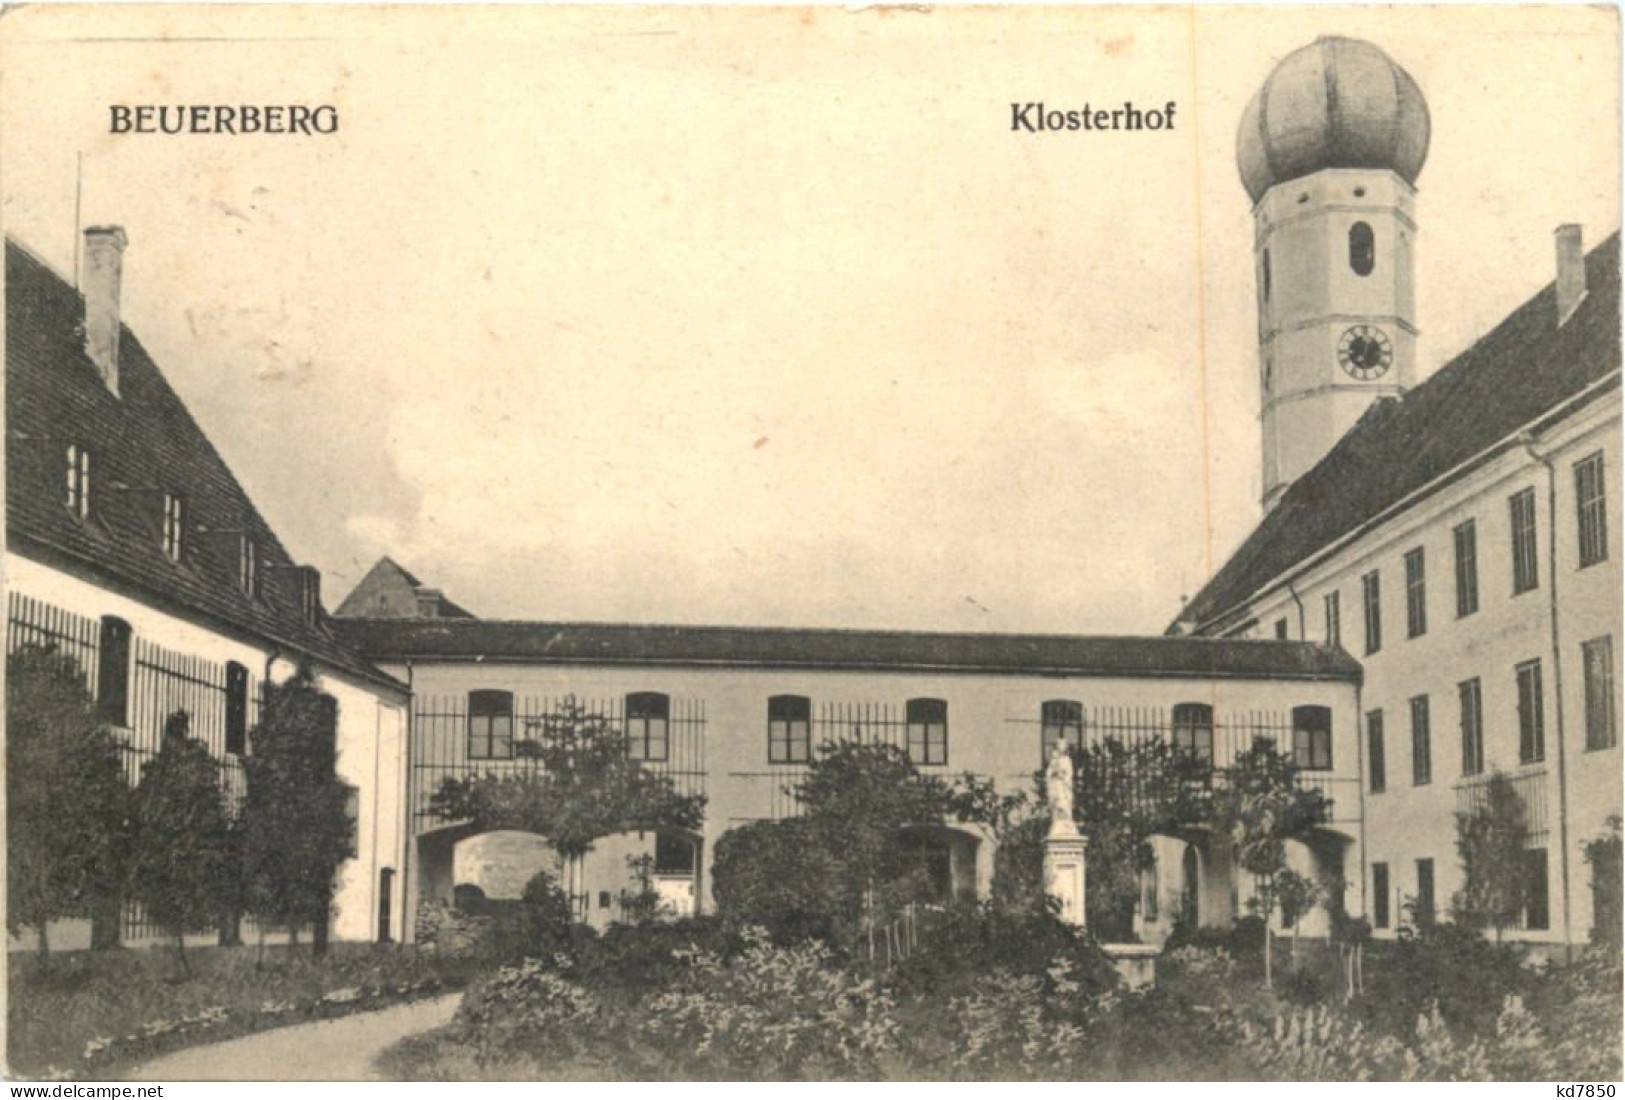 Beuerberg - Loisachtal, Klosterhof - Bad Toelz